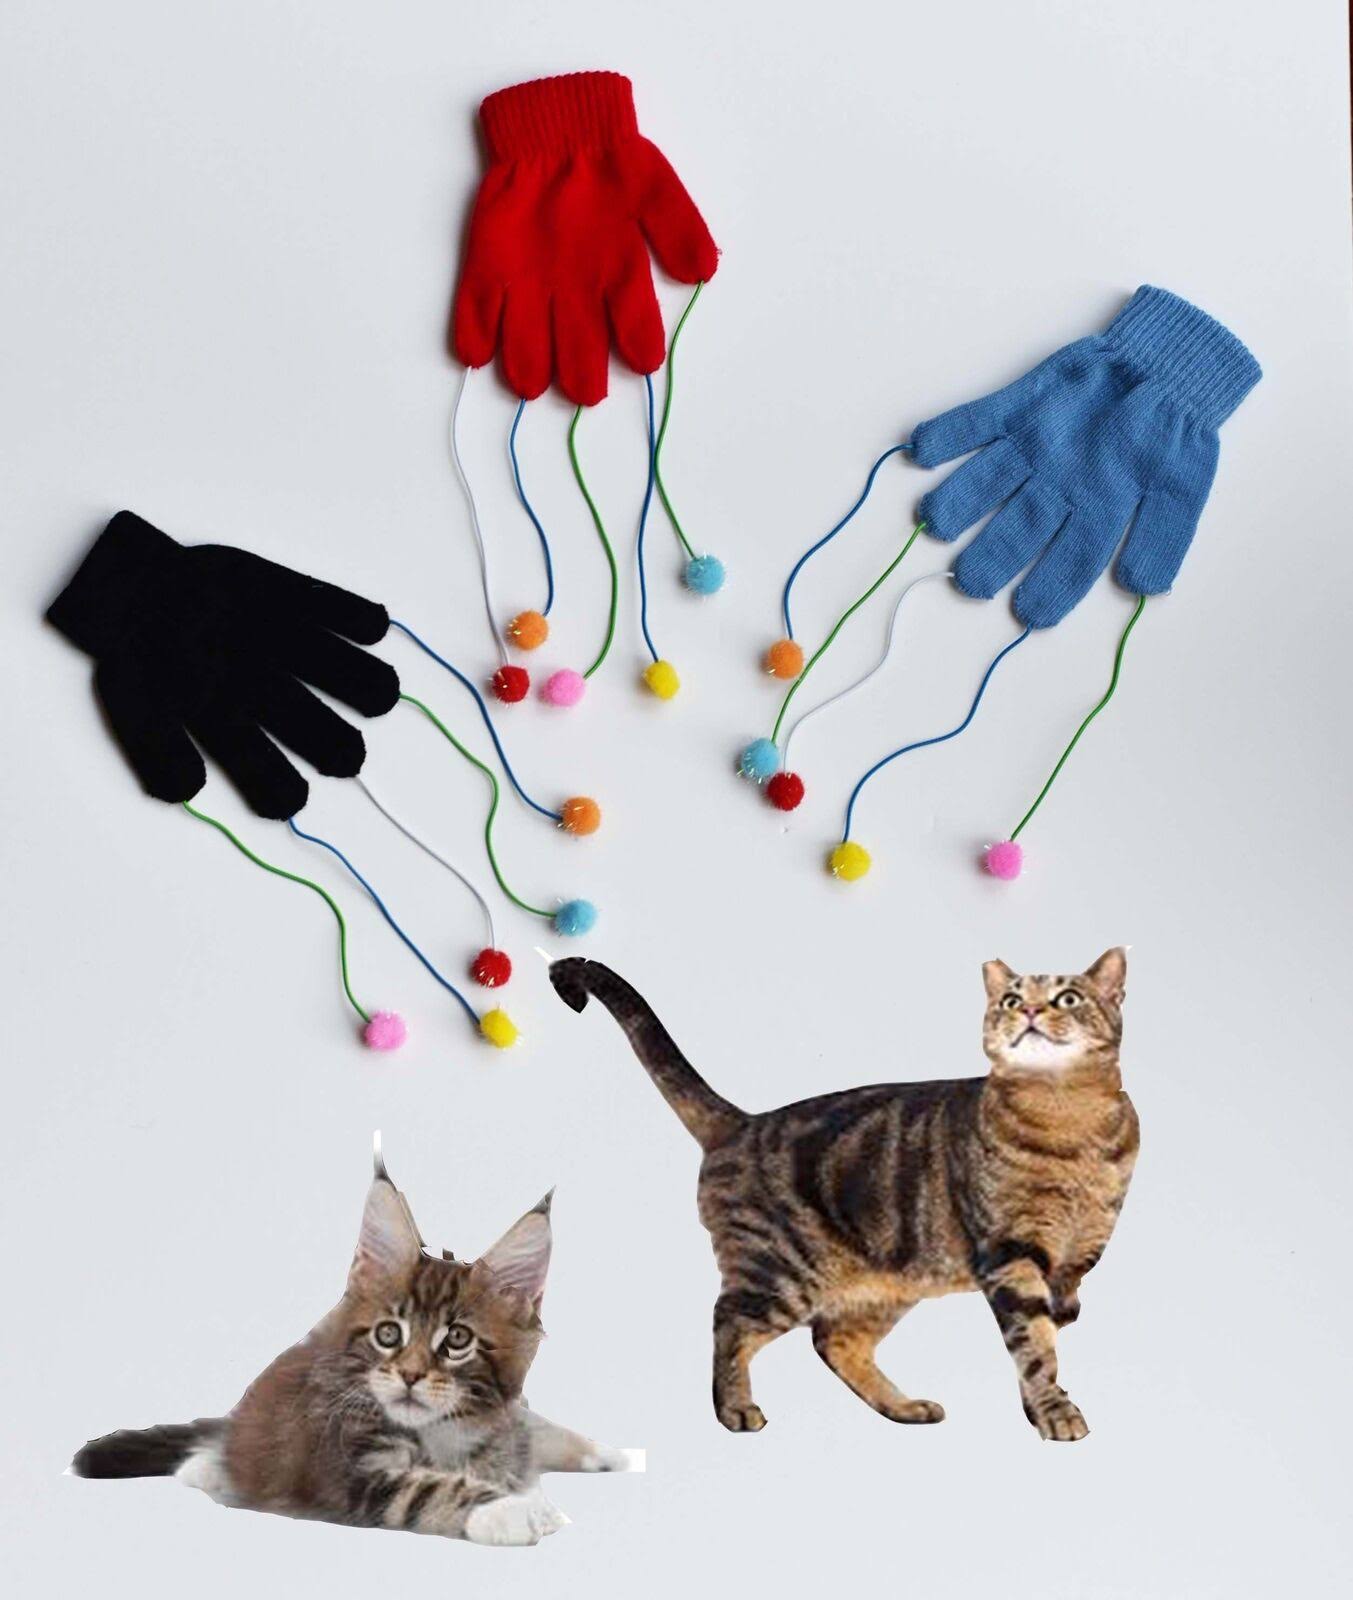 Pet Touch Cat Kitten Play Glove Teaser Fun Toy Activity Magic Glove!